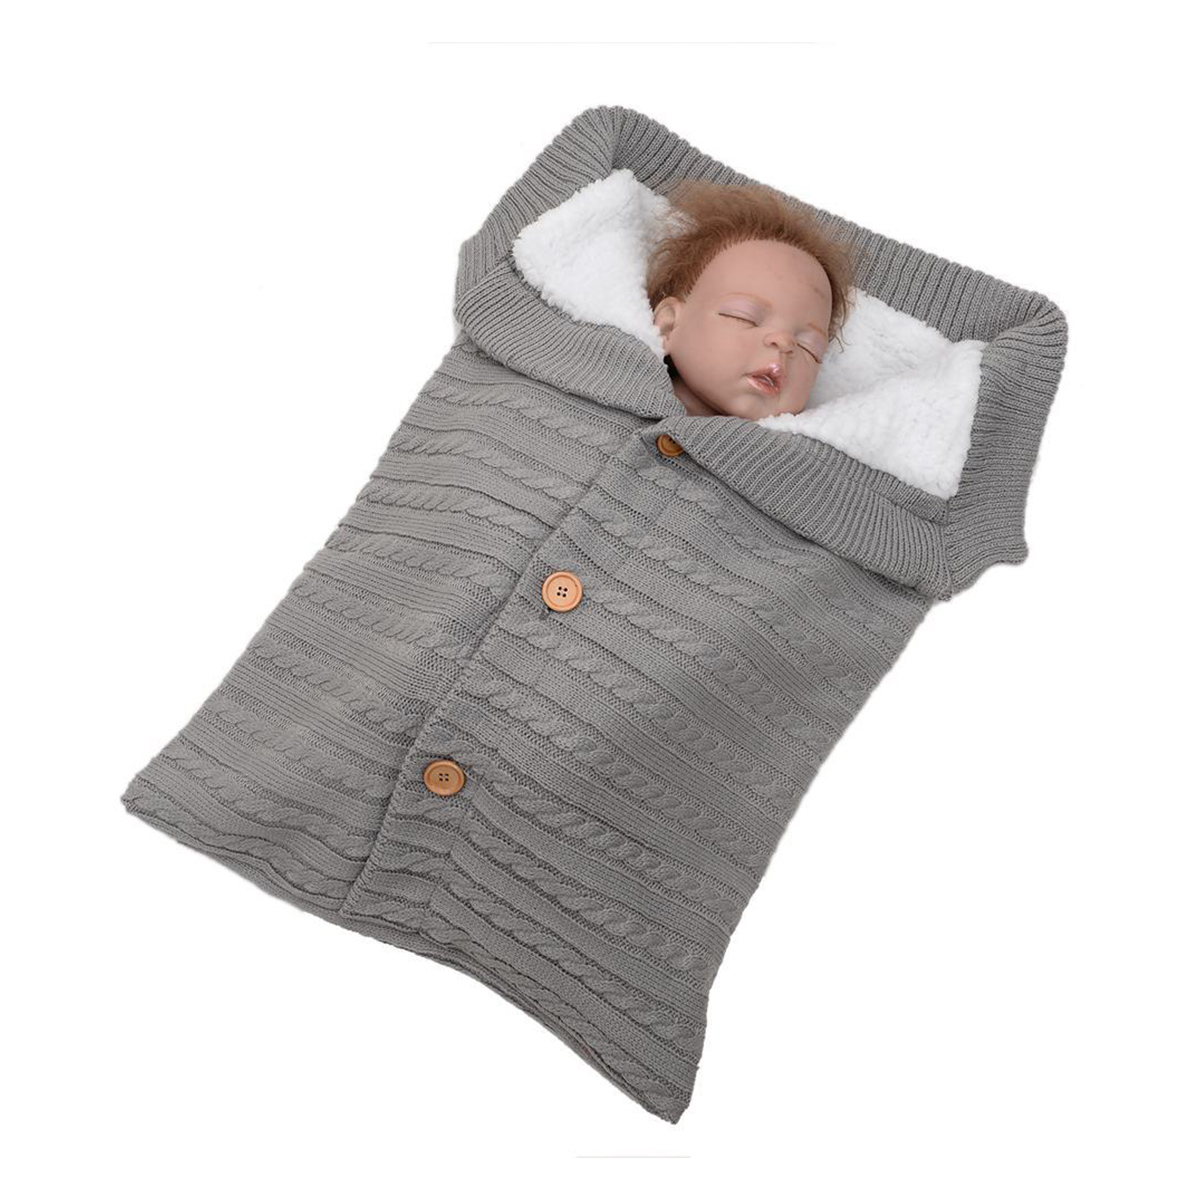 Baby-Stroller-Sleeping-Bag-Warm-Knitting-Soft-Sleeping-Blanket-Outdoor-Windproof-Cold-Proof-1698174-3